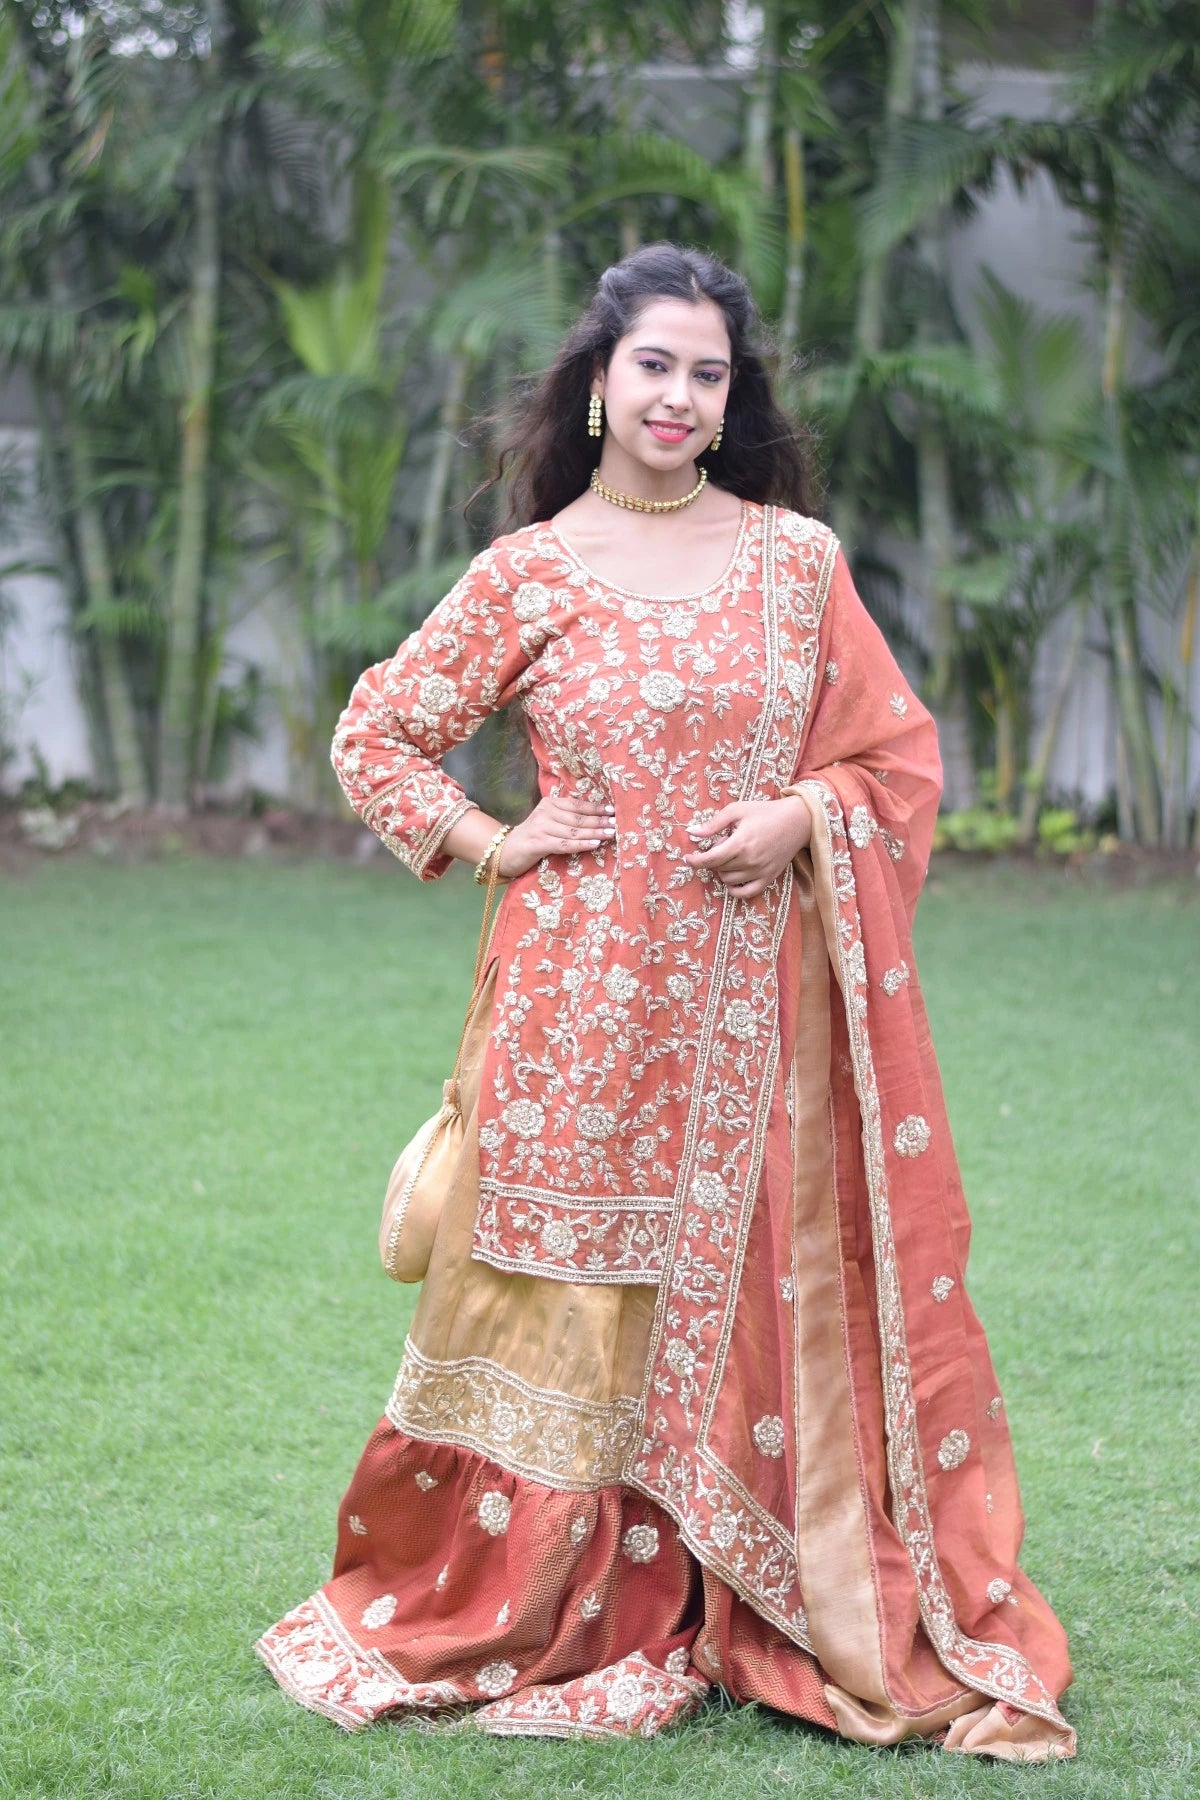 An elegant lady in a traditional golden rust farshi gharara.